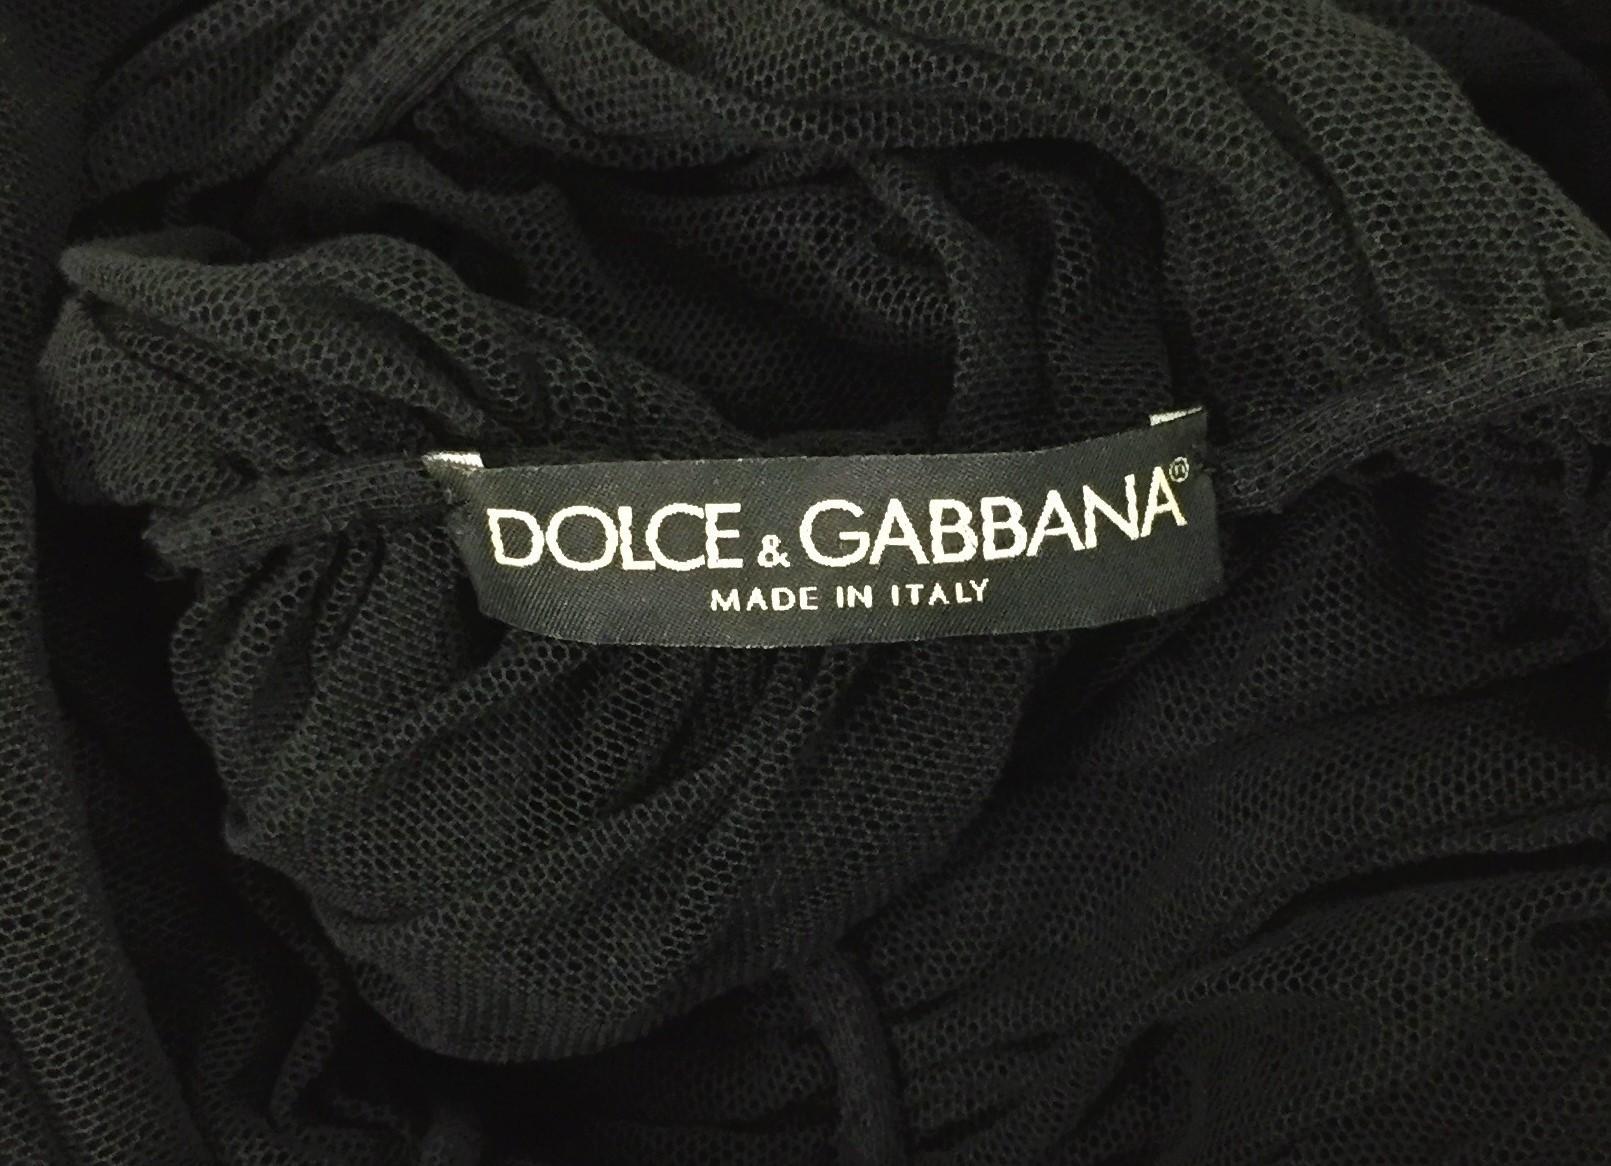 Women's S/S 2001 Dolce & Gabbana Runway Sheer Black Fishnet Mesh Pin-Up Wiggle Dress